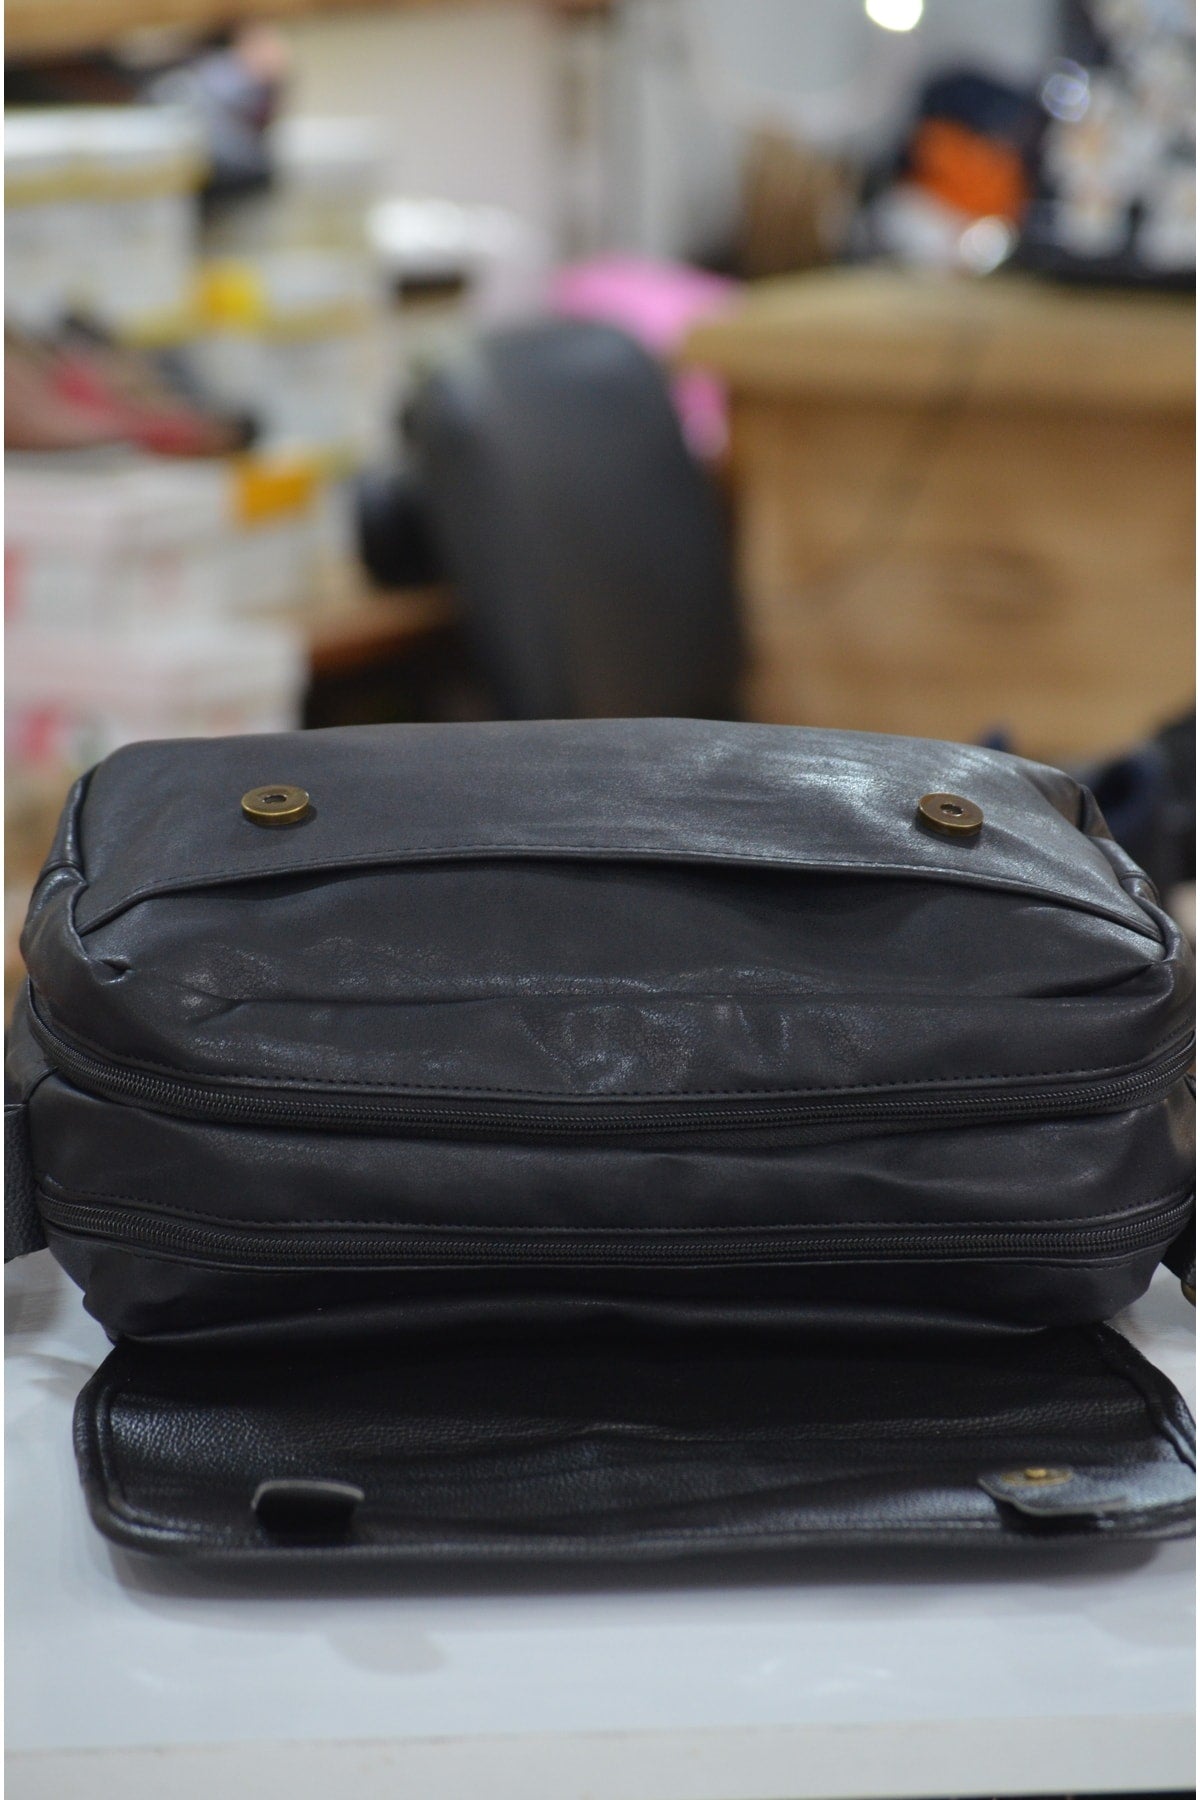 Handy Unisex Black Messenger Bag, Briefcase, Travel Bag with Zipper Cover